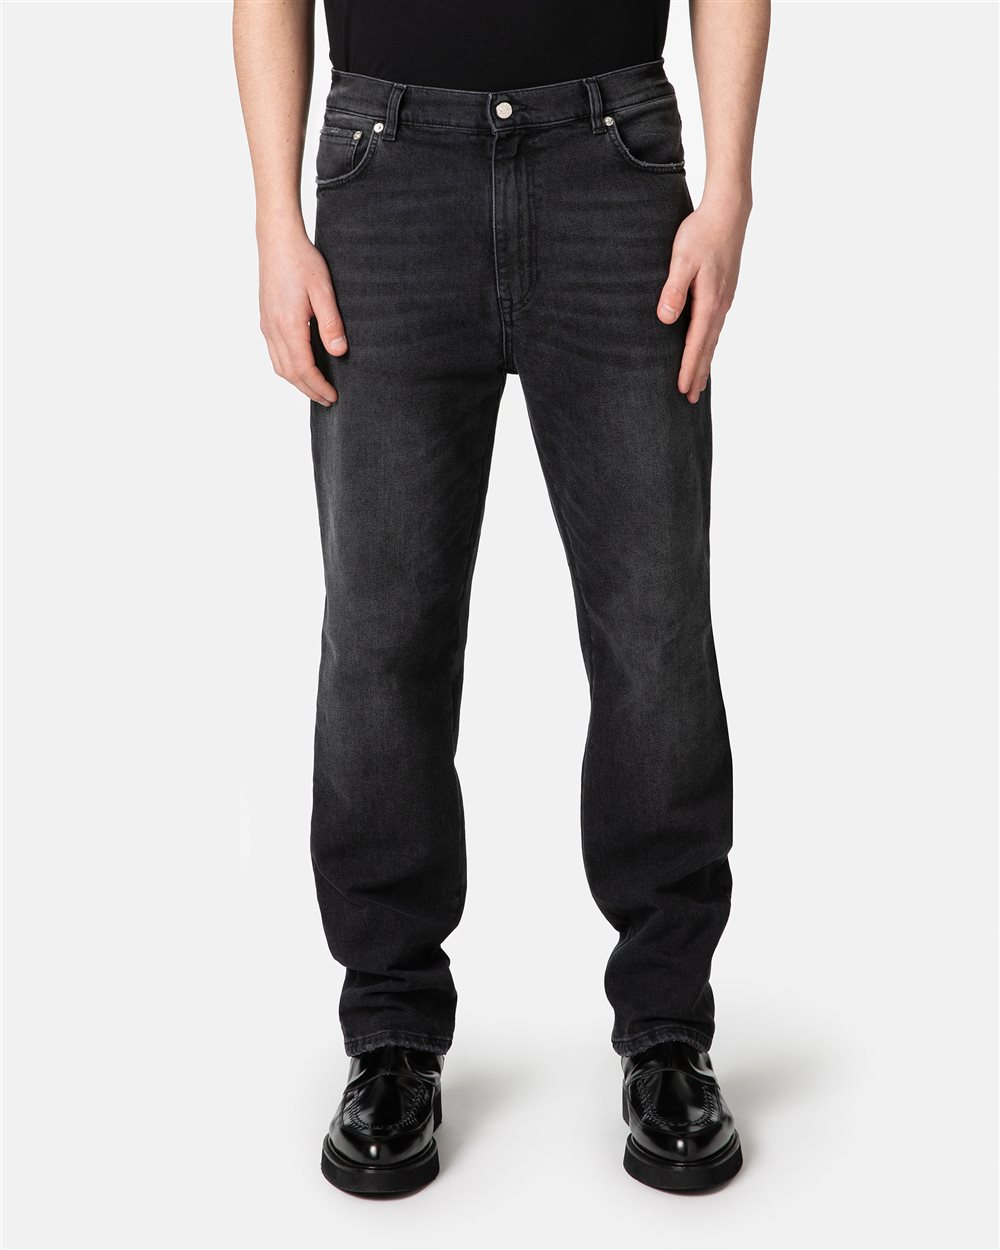 Jeans nero con logo - Iceberg - Official Website